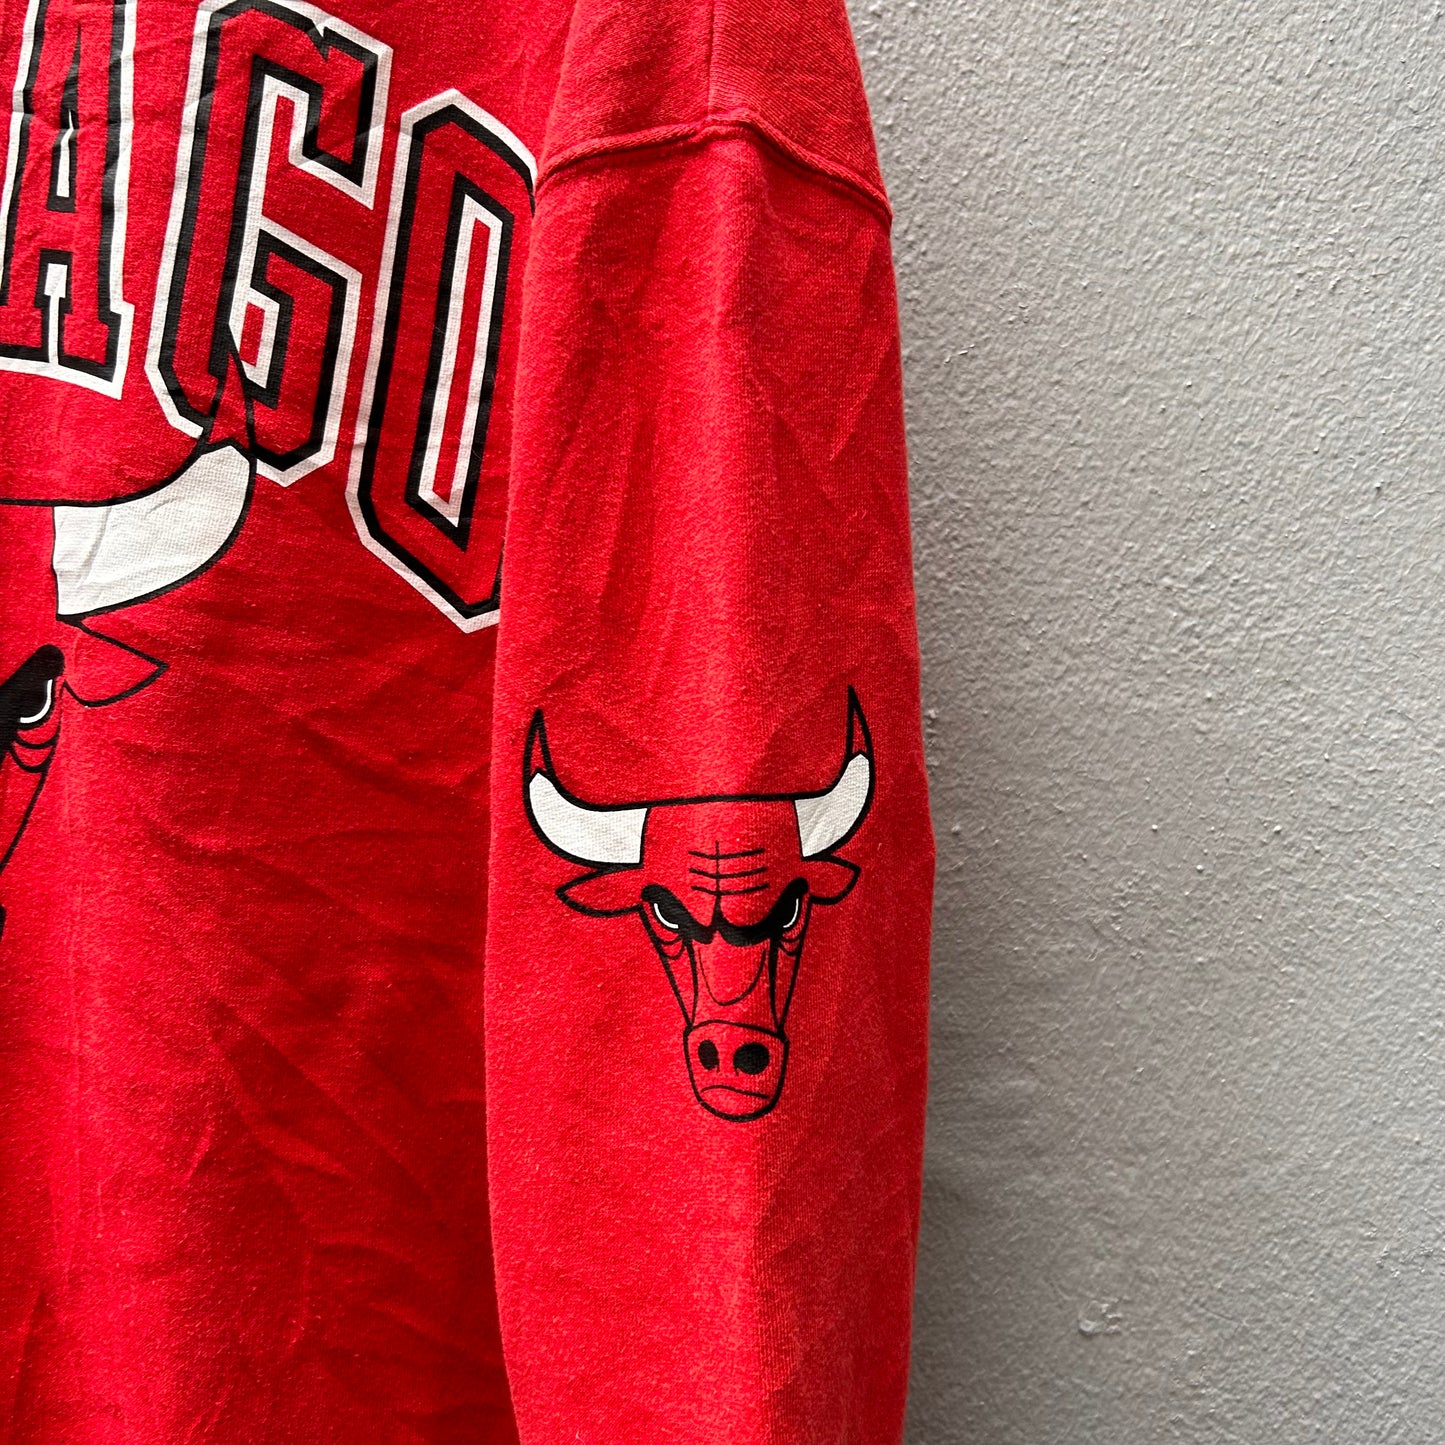 Chicago Bulls Sweatshirt